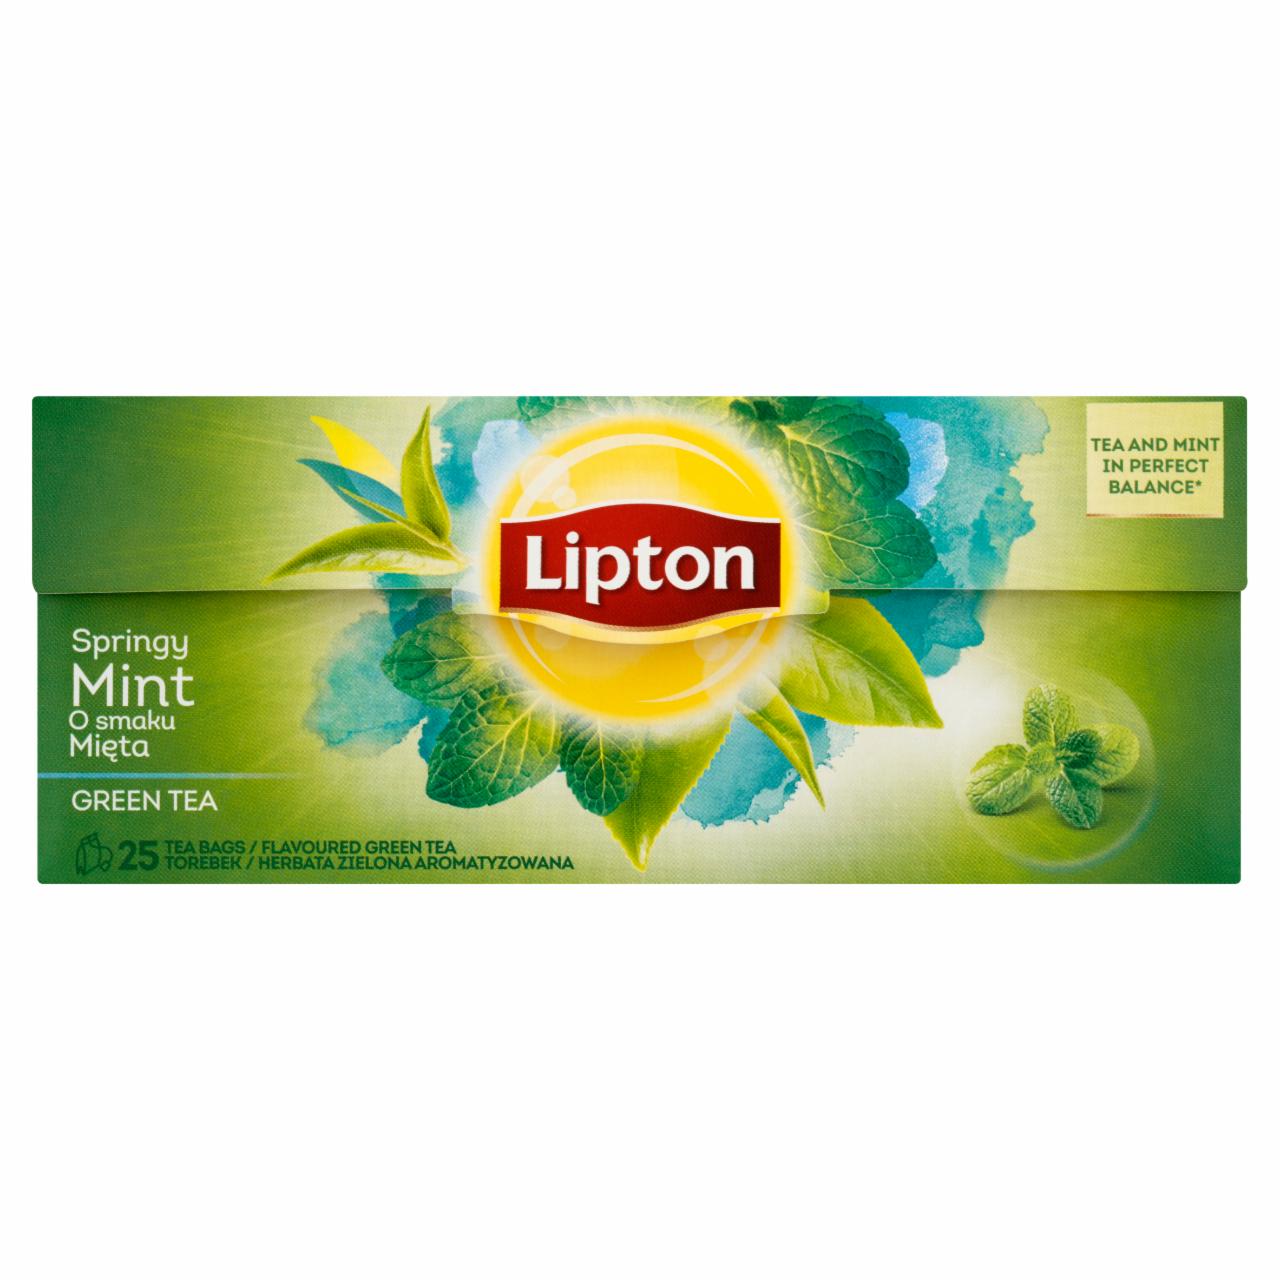 Zdjęcia - Lipton o smaku Mięta Herbata zielona aromatyzowana 32,5 g (25 torebek)